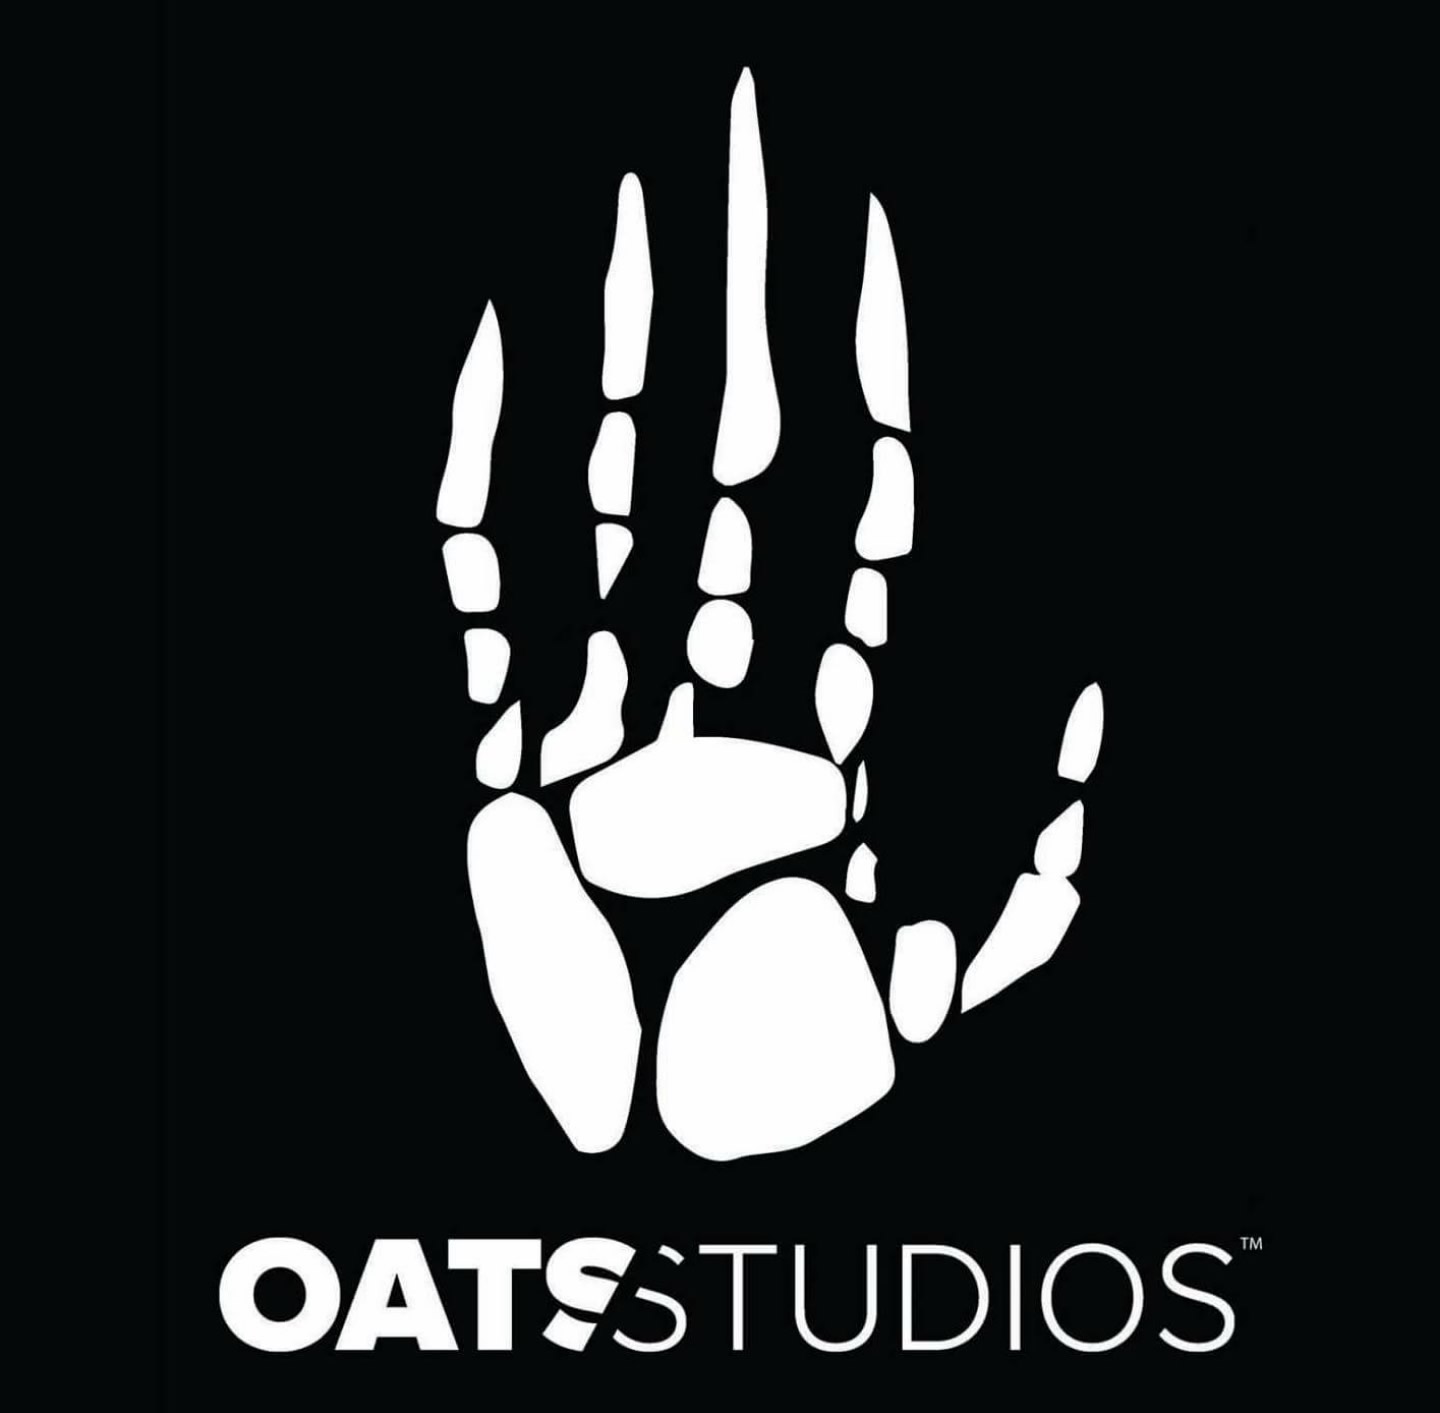 Oats Studios Series Volume 1 |  Neil Blomkamp's science fiction shorts hits Netflix in October 2021